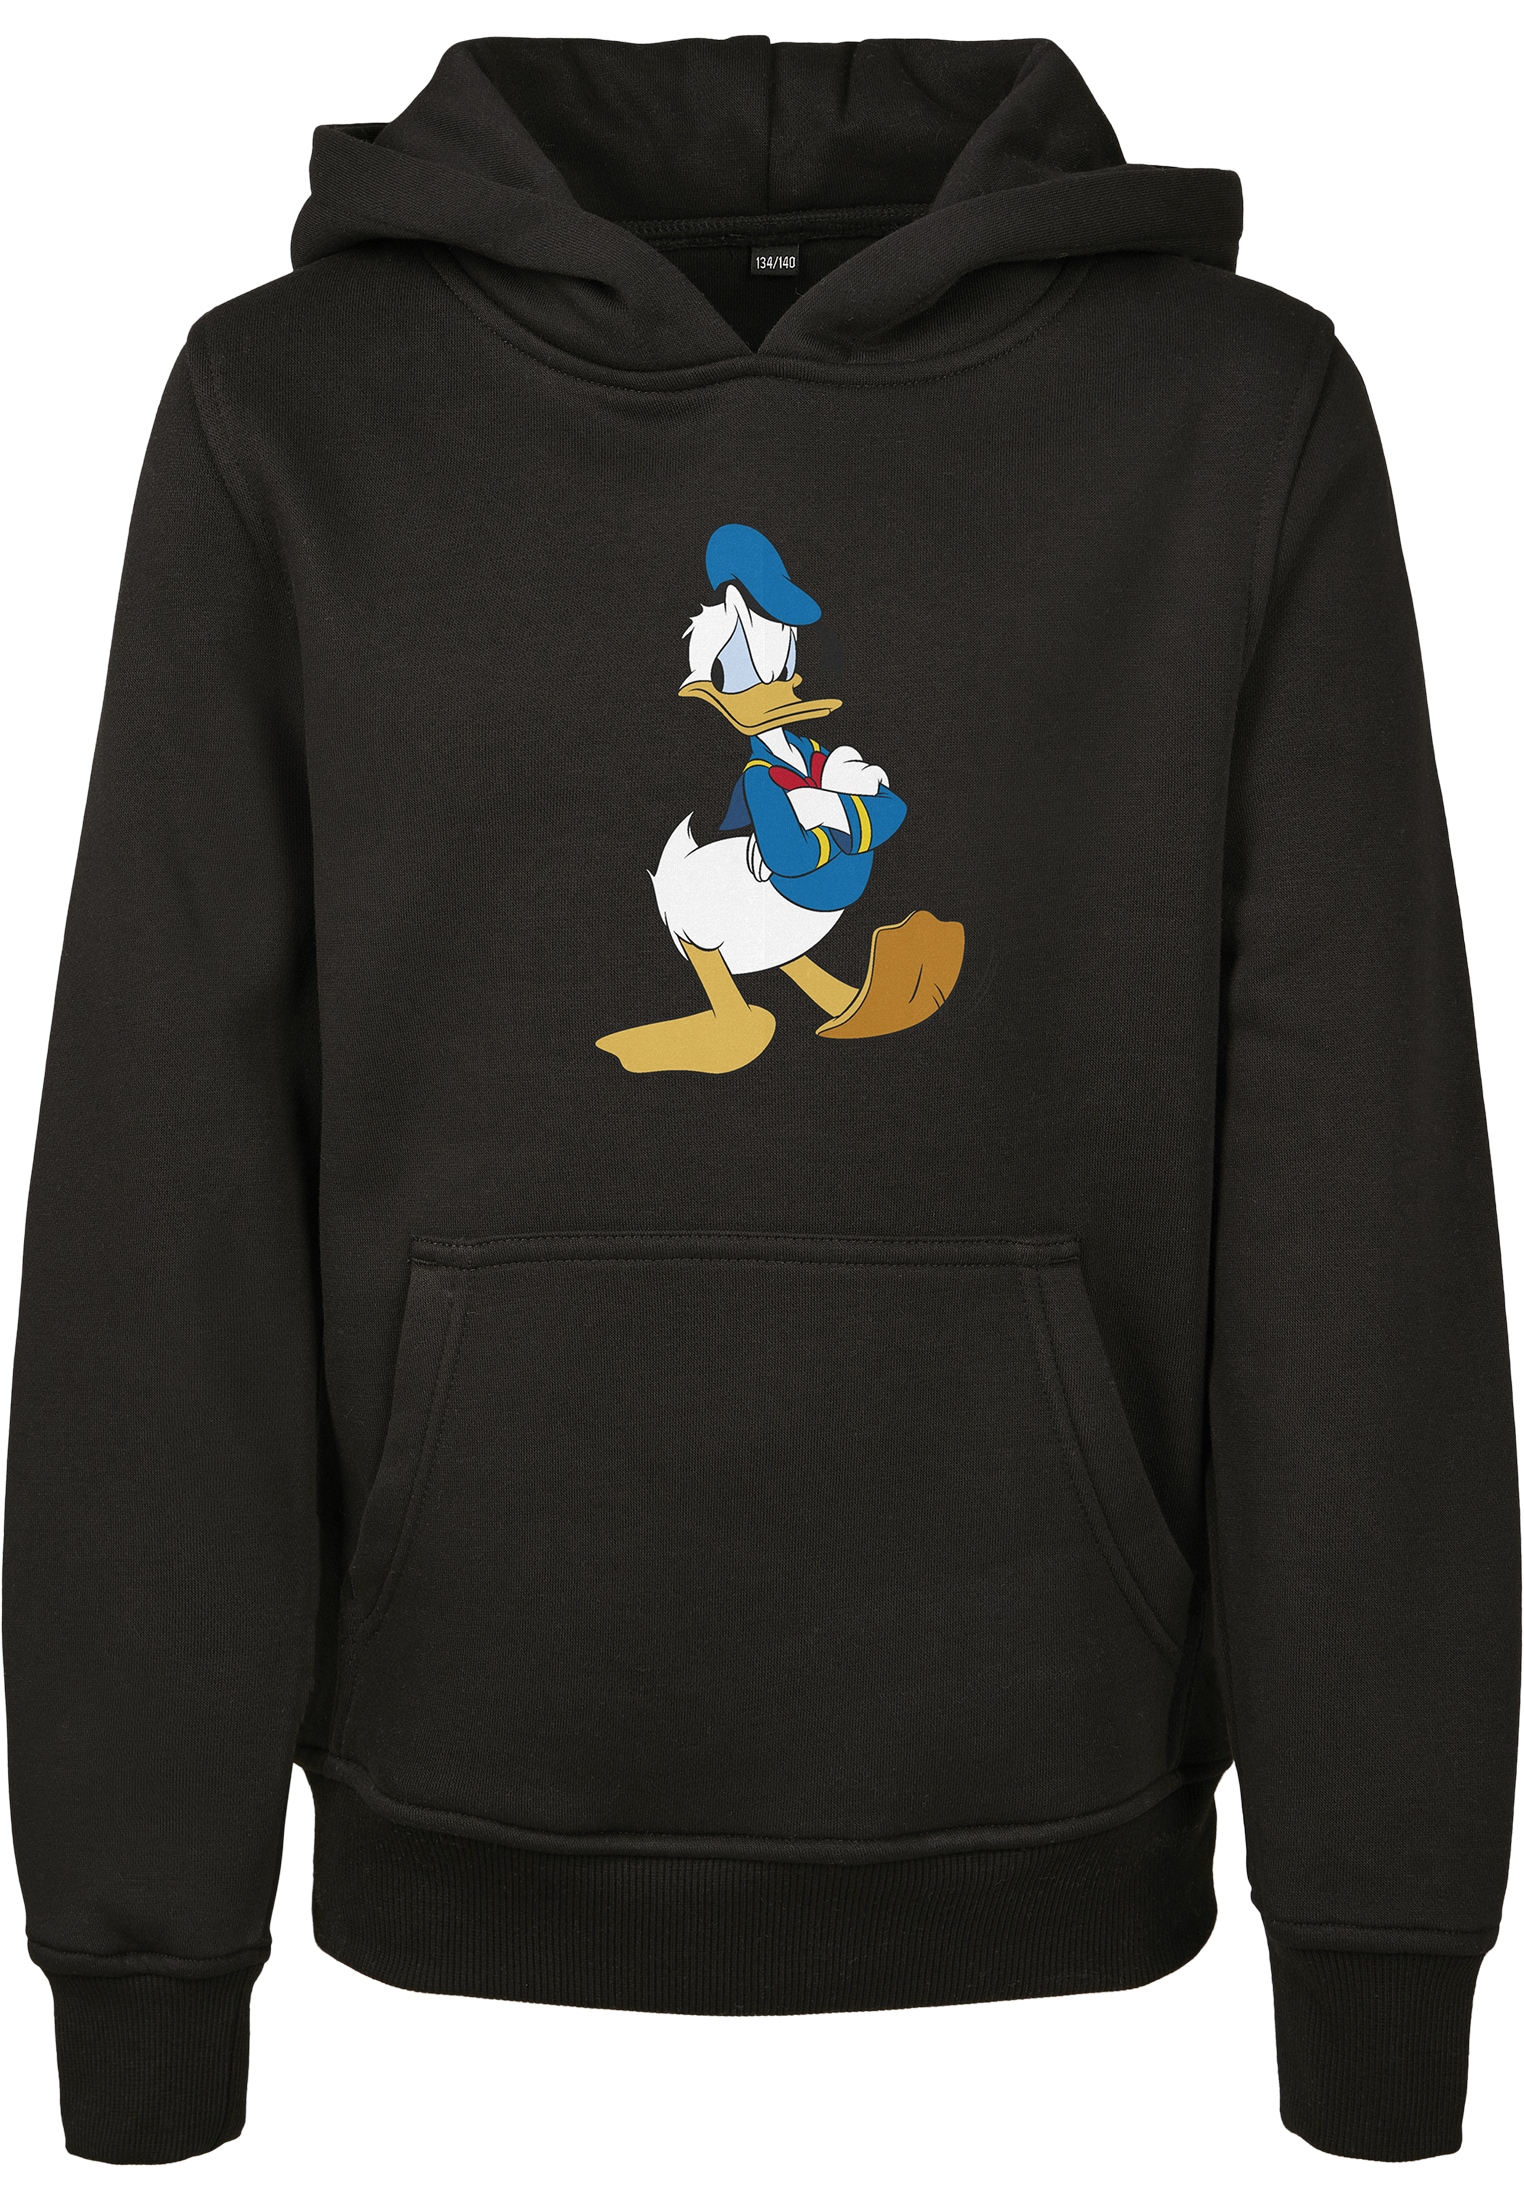 BAUR (1 Donald | Hoodie Pose tlg.) Duck MisterTee »Kinder Kids kaufen Hoody«,